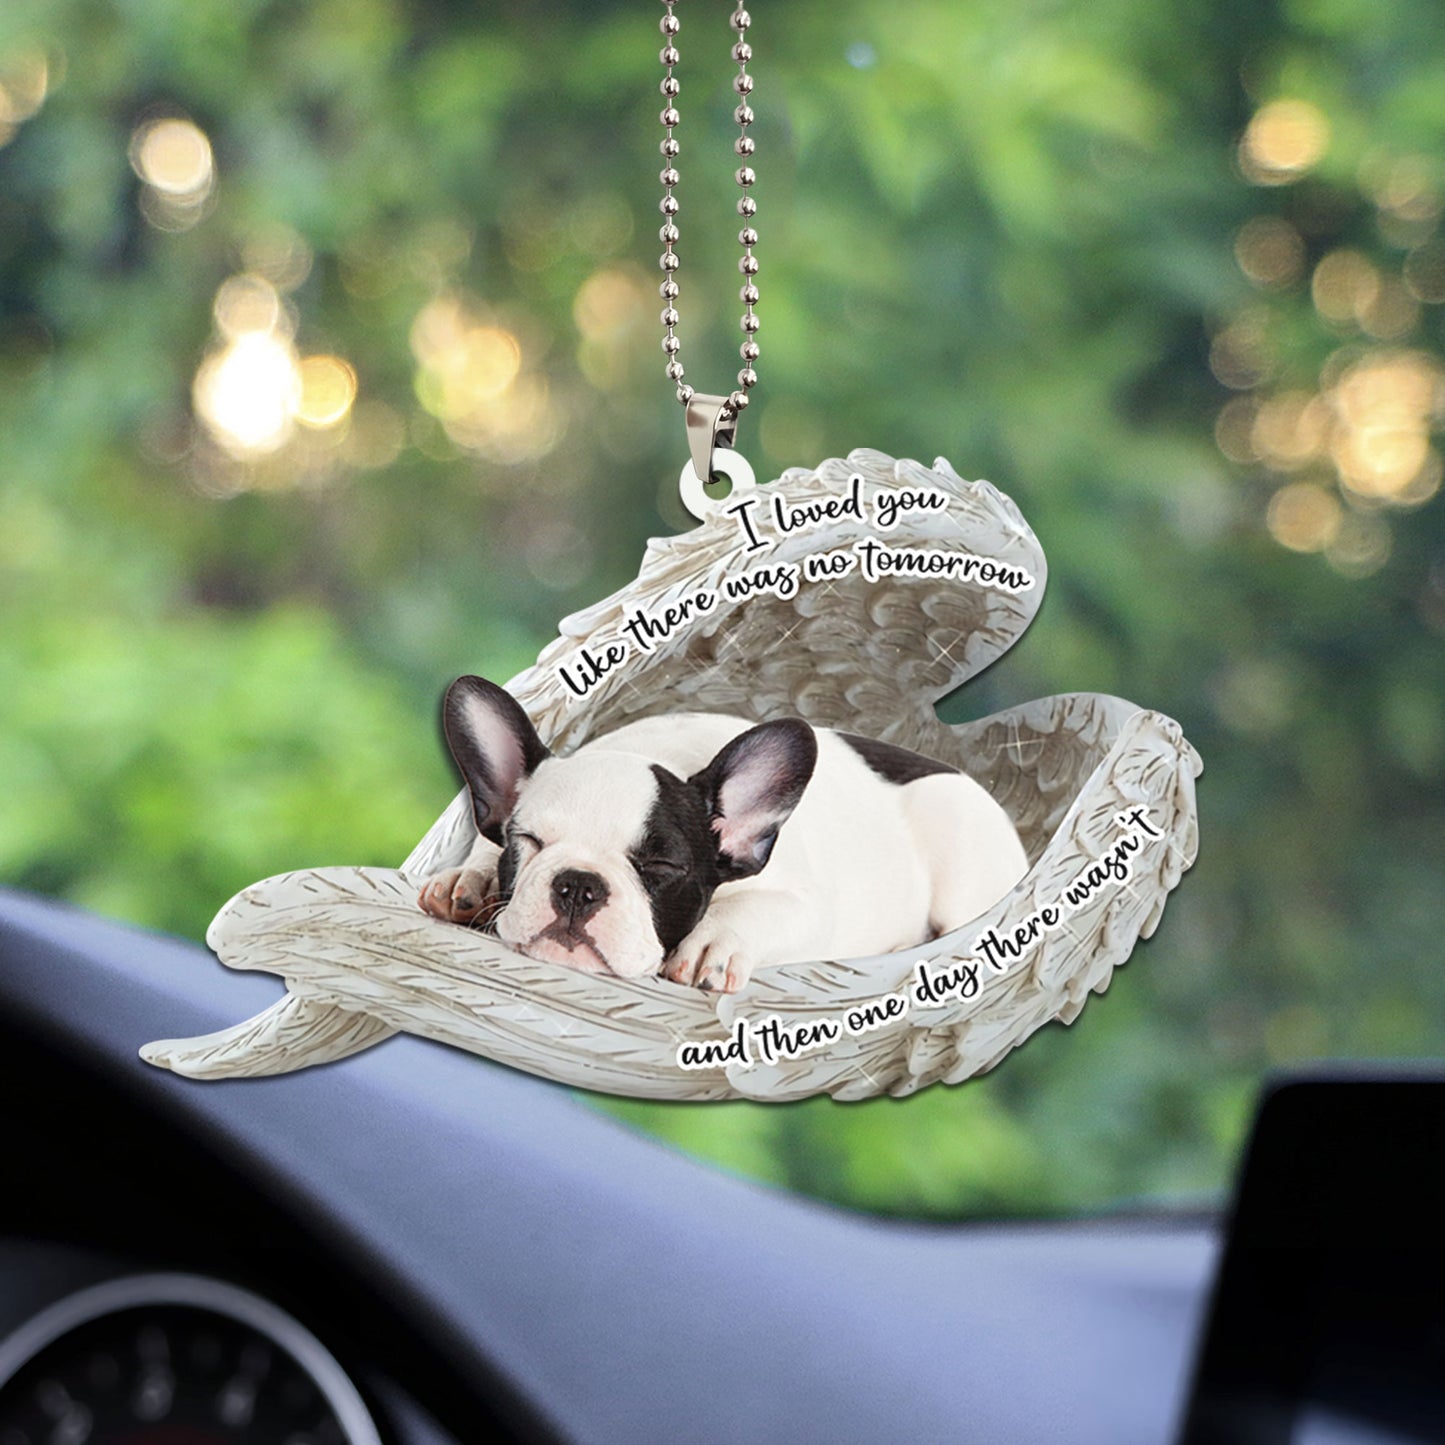 French Bulldog Sleeping Angel Personalizedwitch Flat Car Ornament